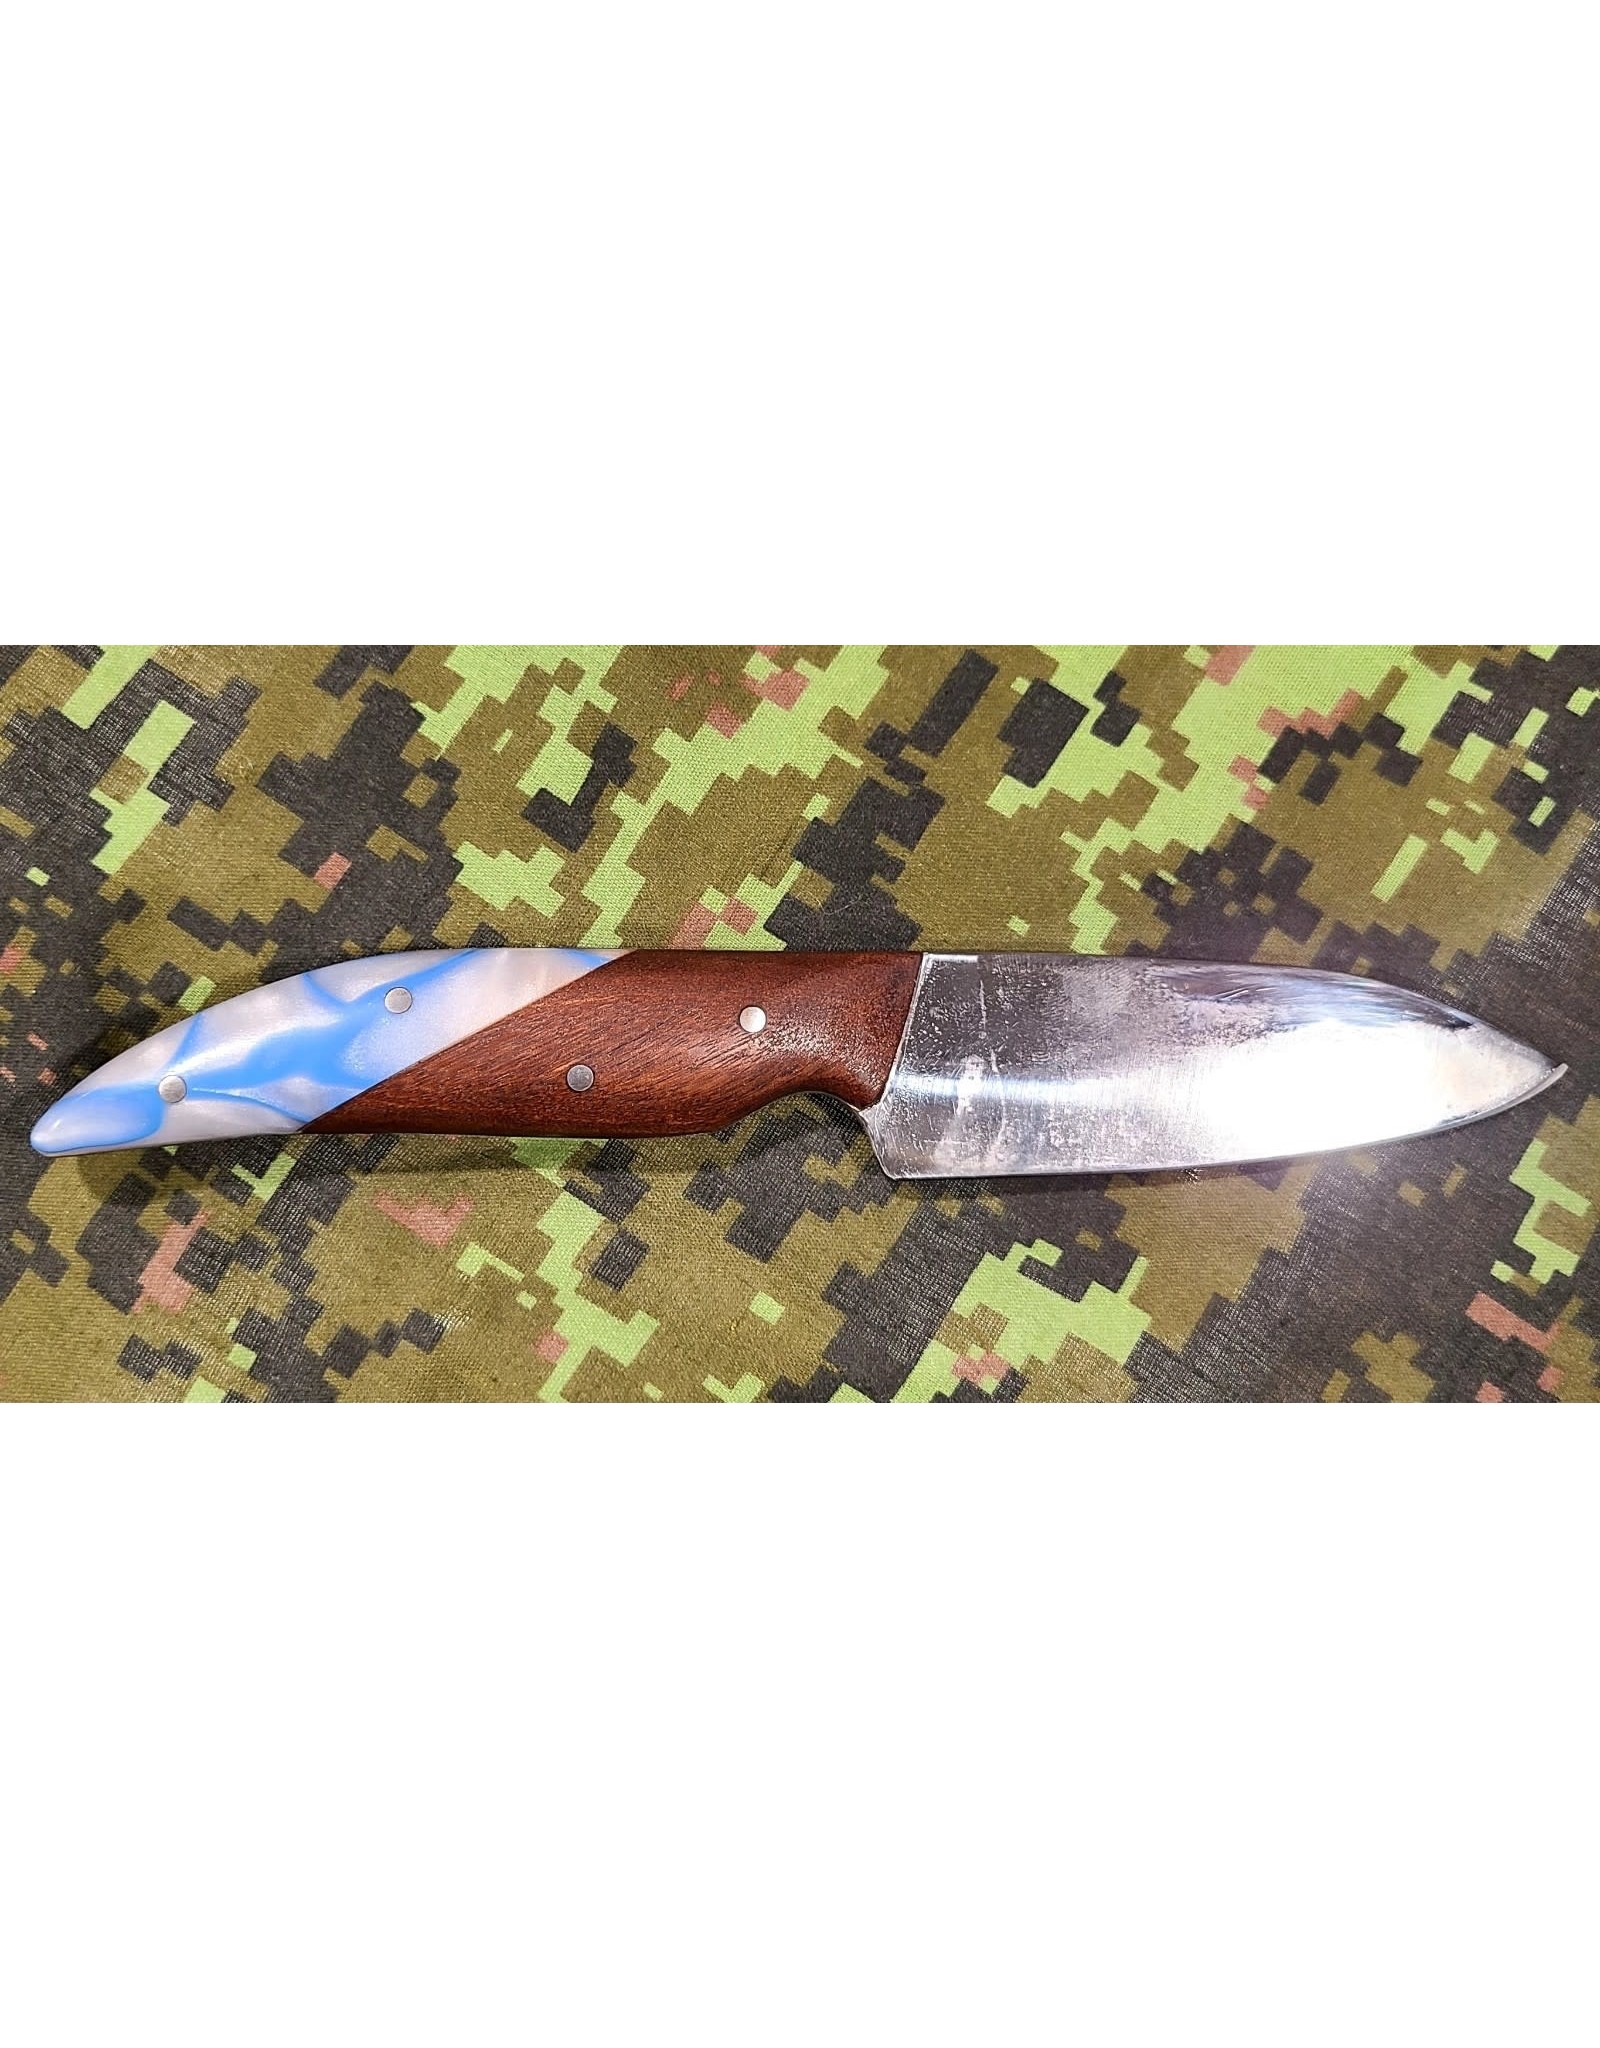 CUTTING EDGE CONSIGN CE BLUE MARBLE KNIFE W/ LEATHER SHEATH